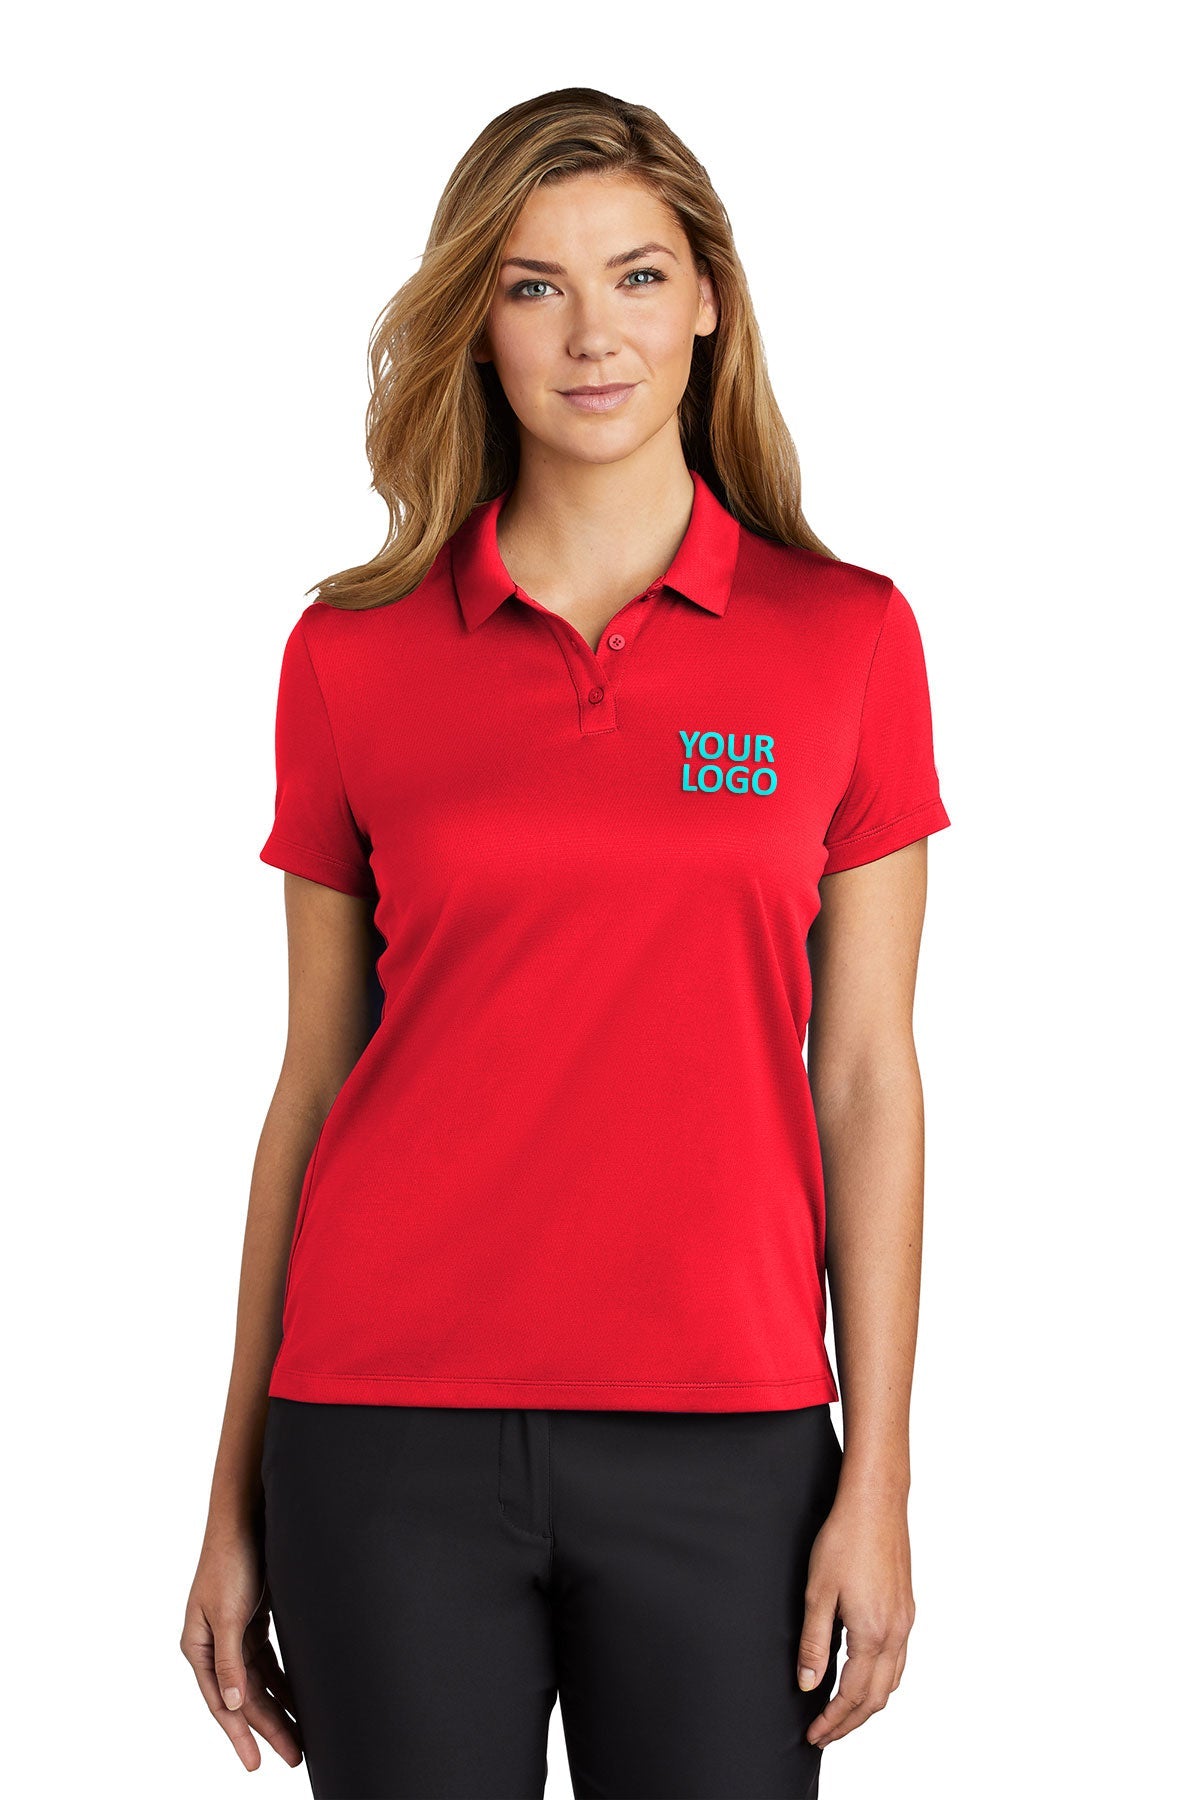 Nike University Red NKBV6043 custom logo polo shirts